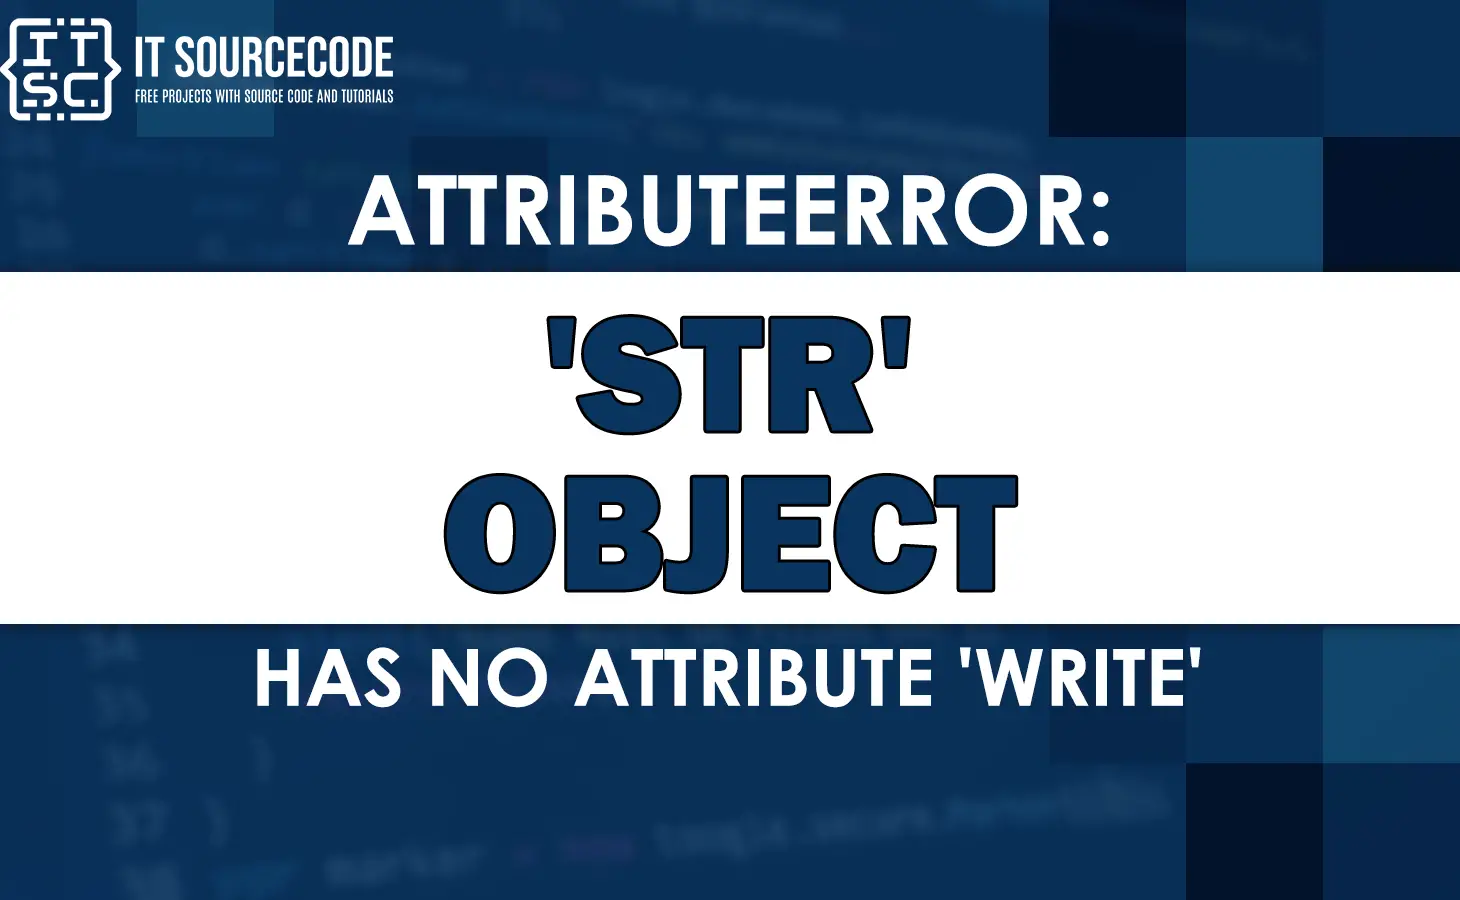 Attributeerror: 'str' object has no attribute 'write'